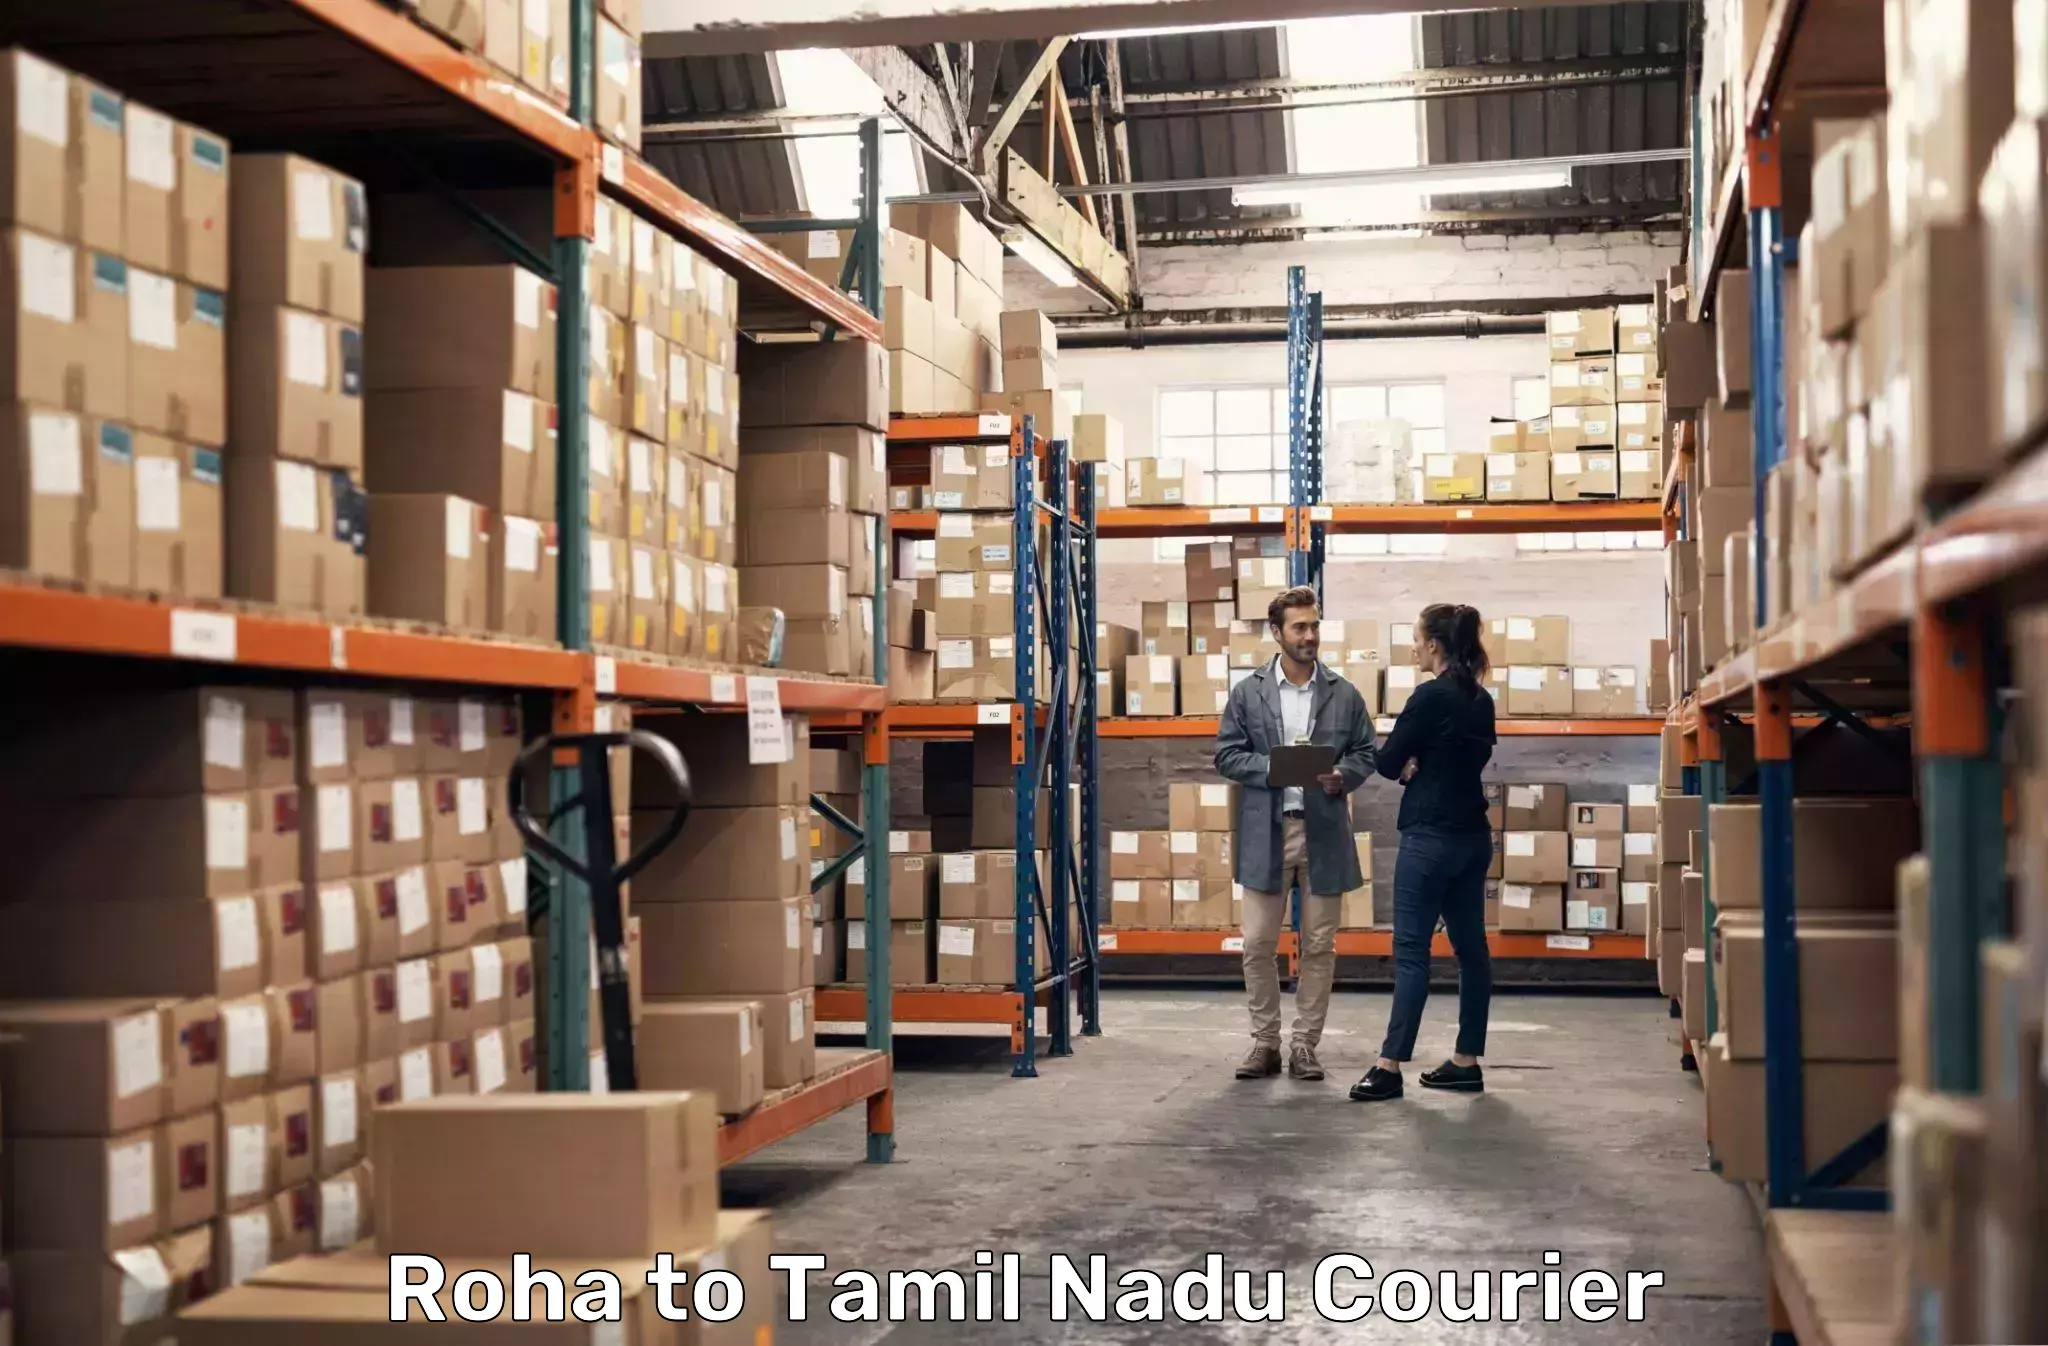 Tracking updates Roha to Tamil Nadu